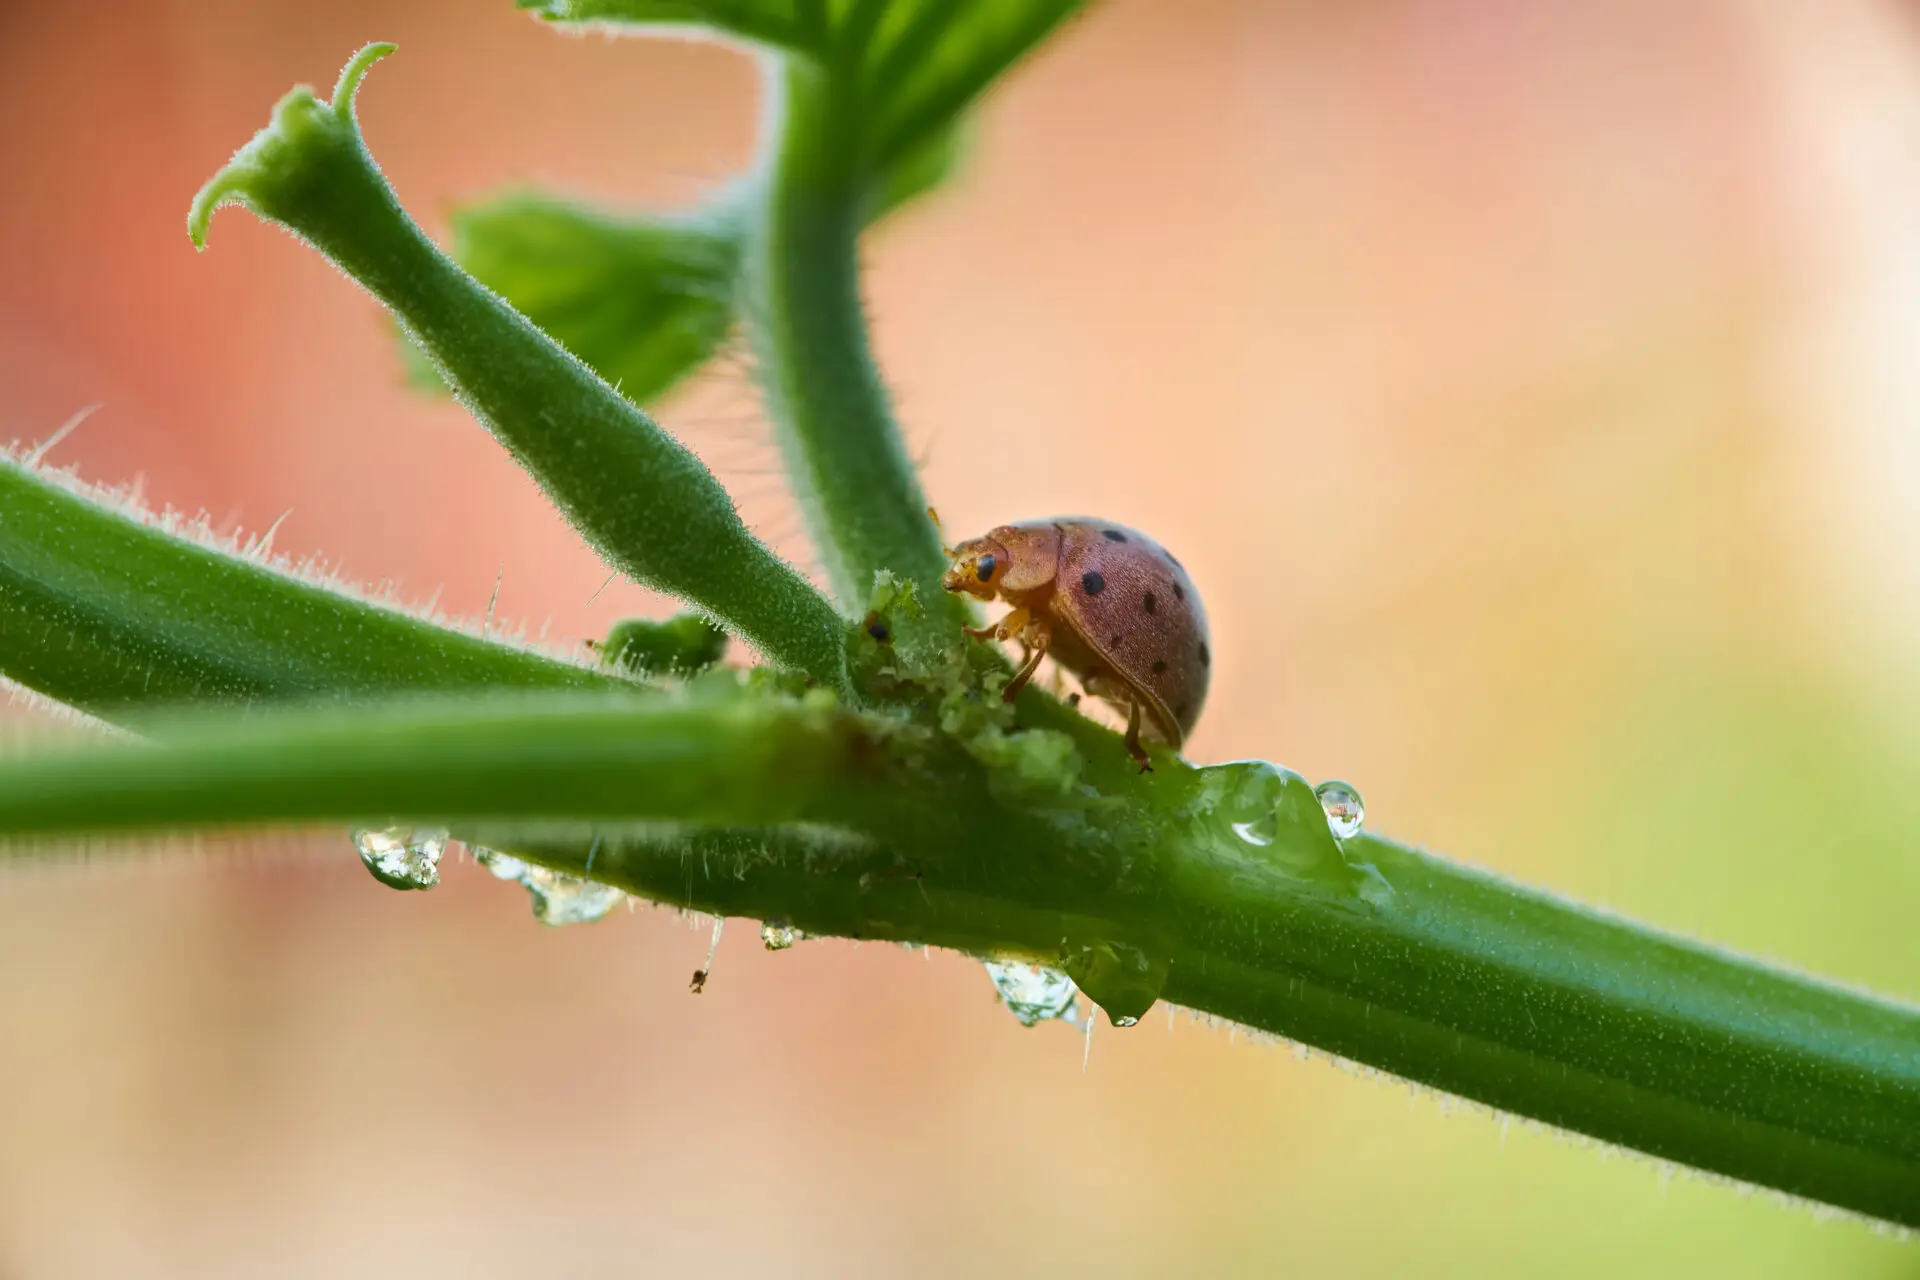 close up view of the ladybug on the plant 2023 11 27 05 10 57 utc